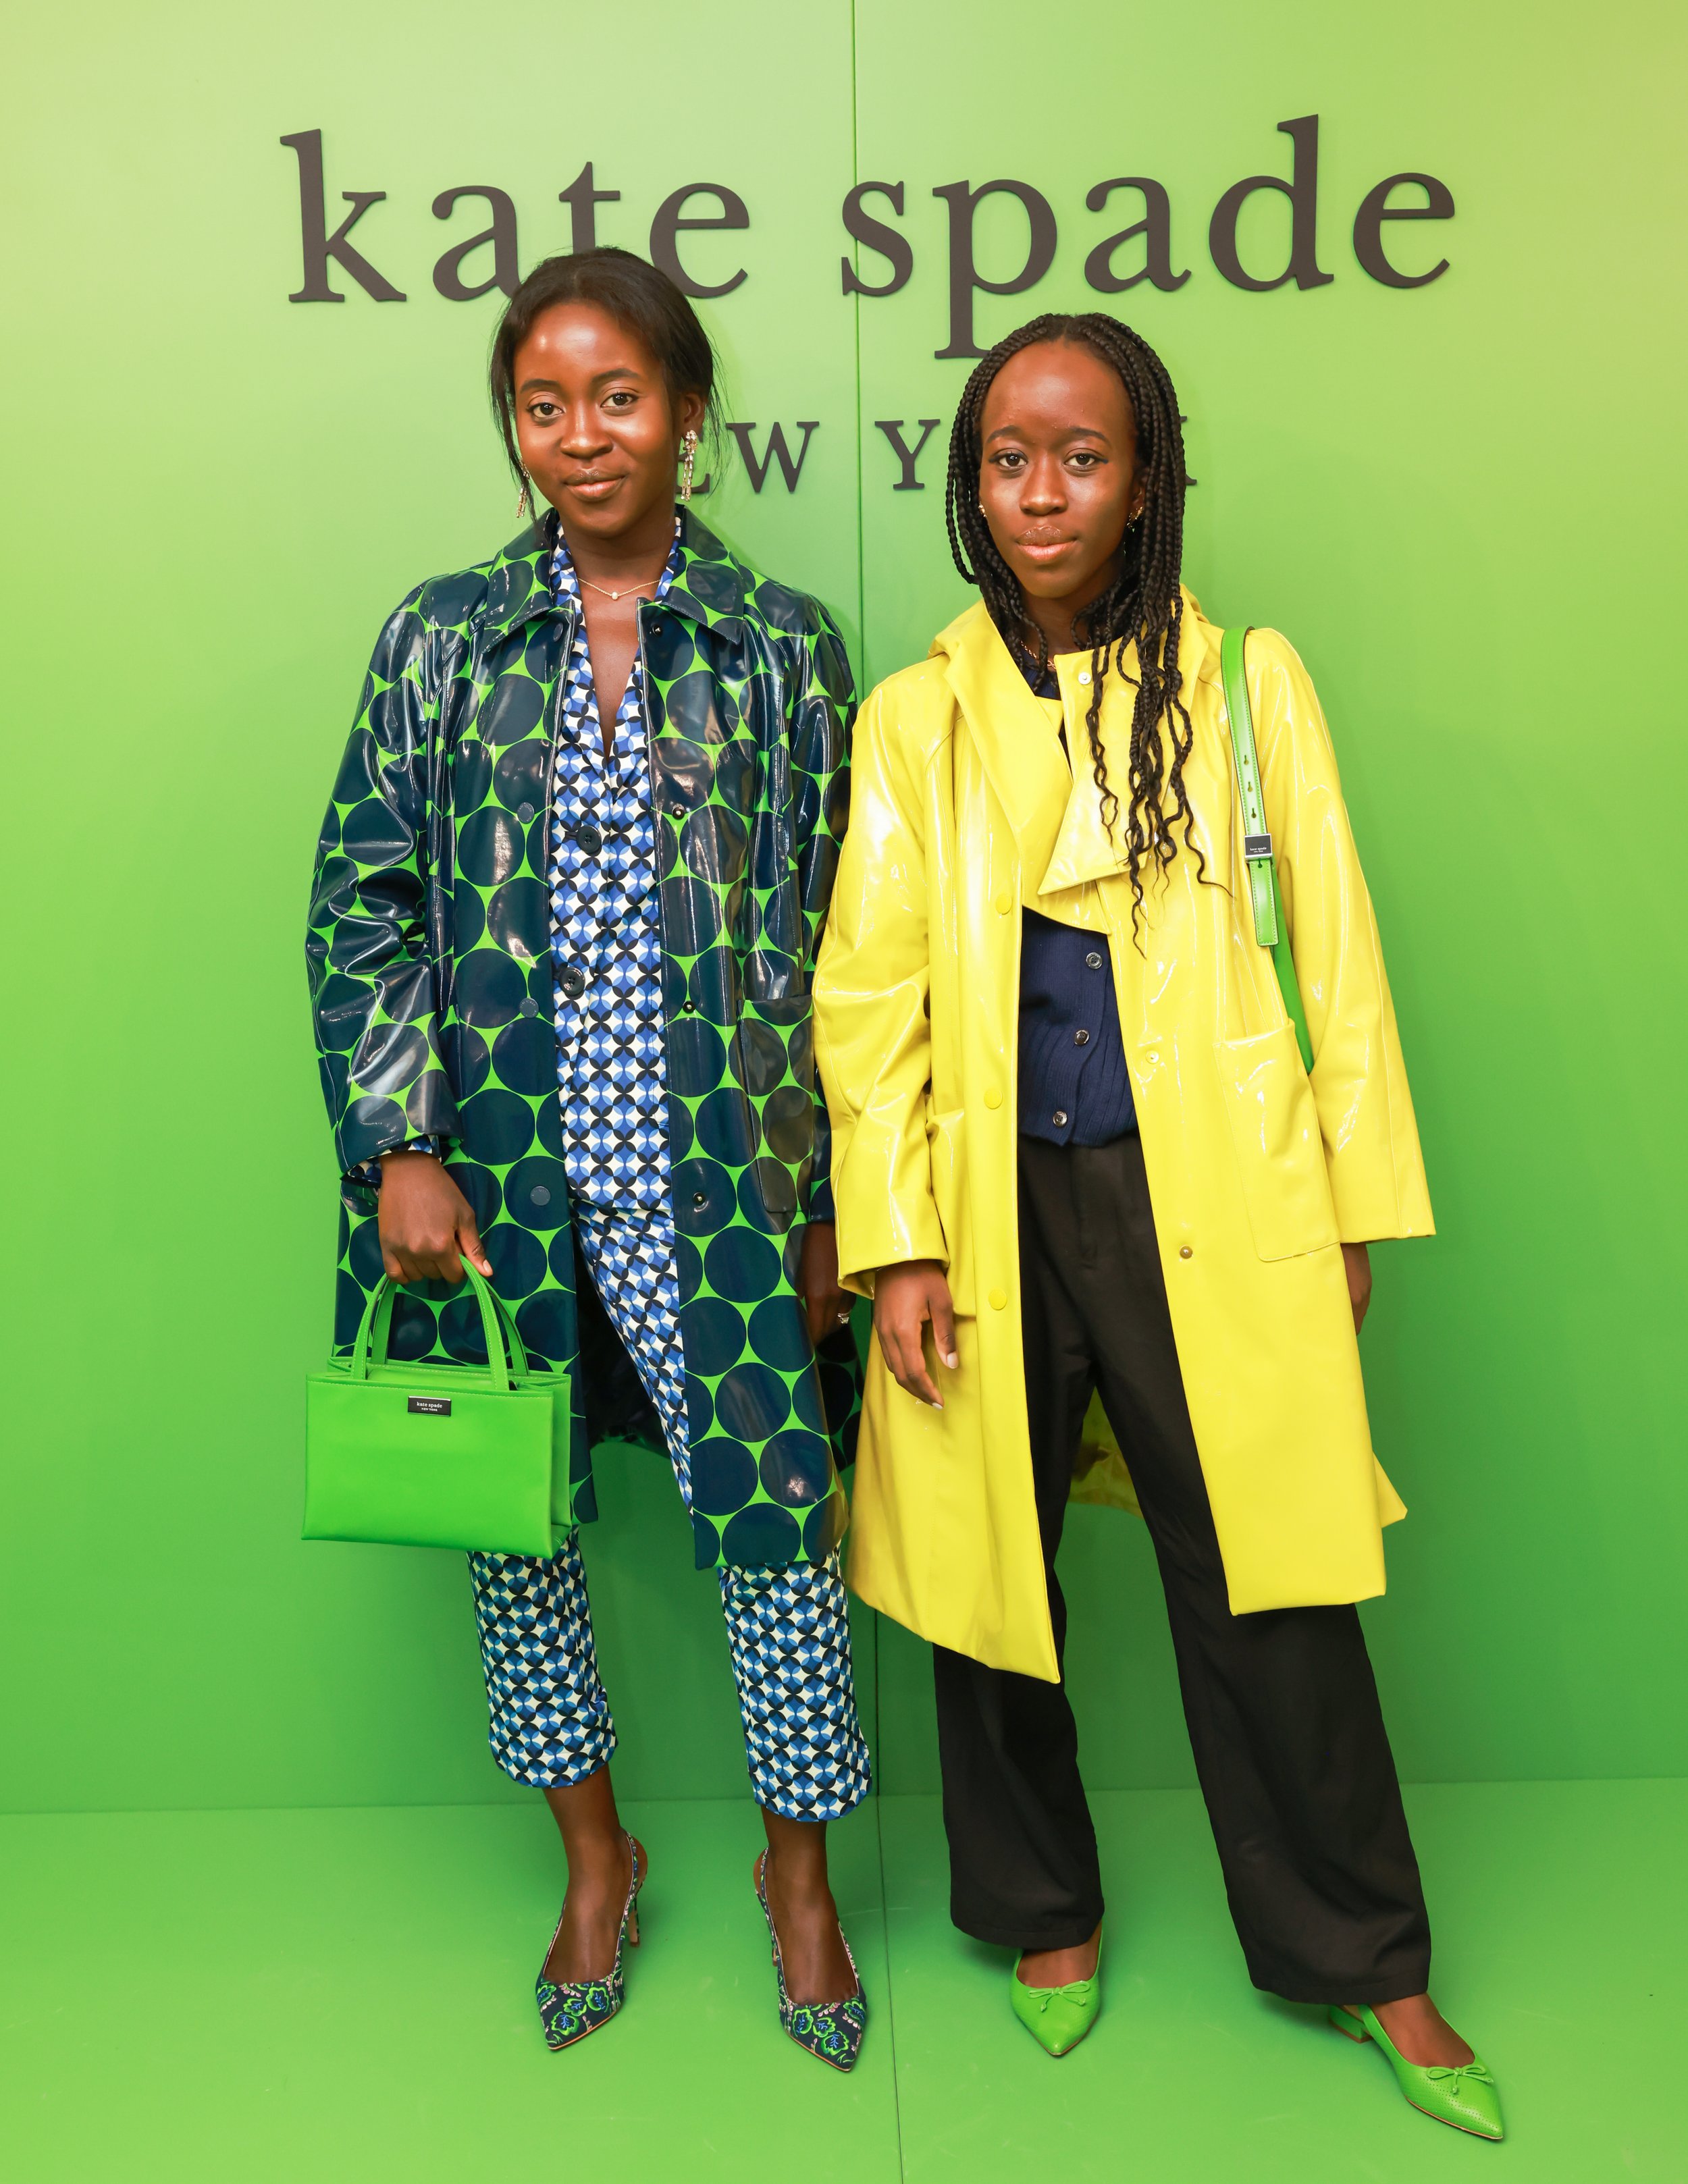 kate spade new york Kicks Off New York Fashion Week With AN Immersive ...